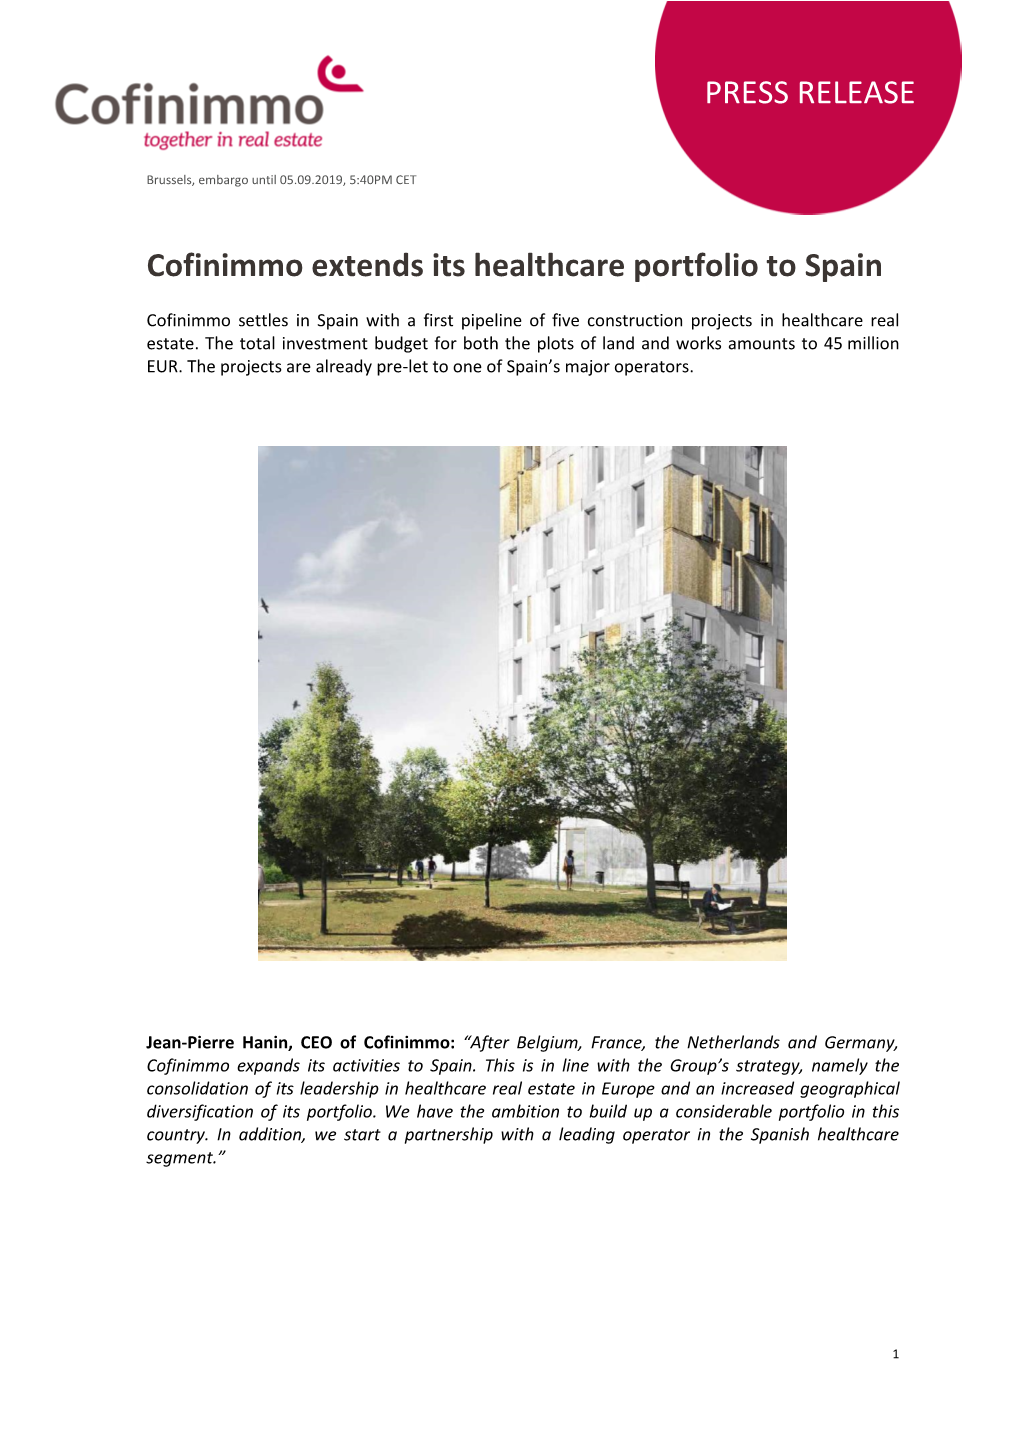 PRESS RELEASE Cofinimmo Extends Its Healthcare Portfolio to Spain